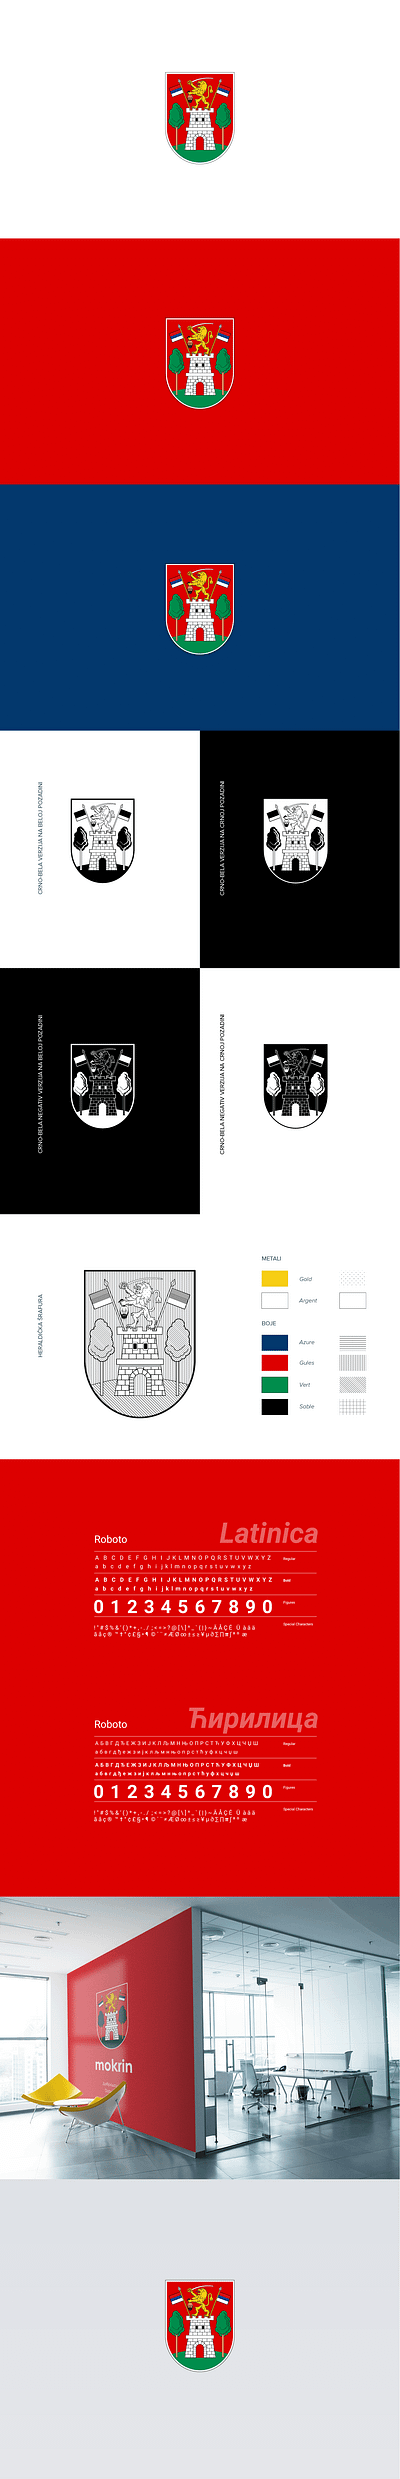 Mokrin – Coat of Arms branding coat of arms emblazon grb lion logo desi mokrin red green грб мокрин